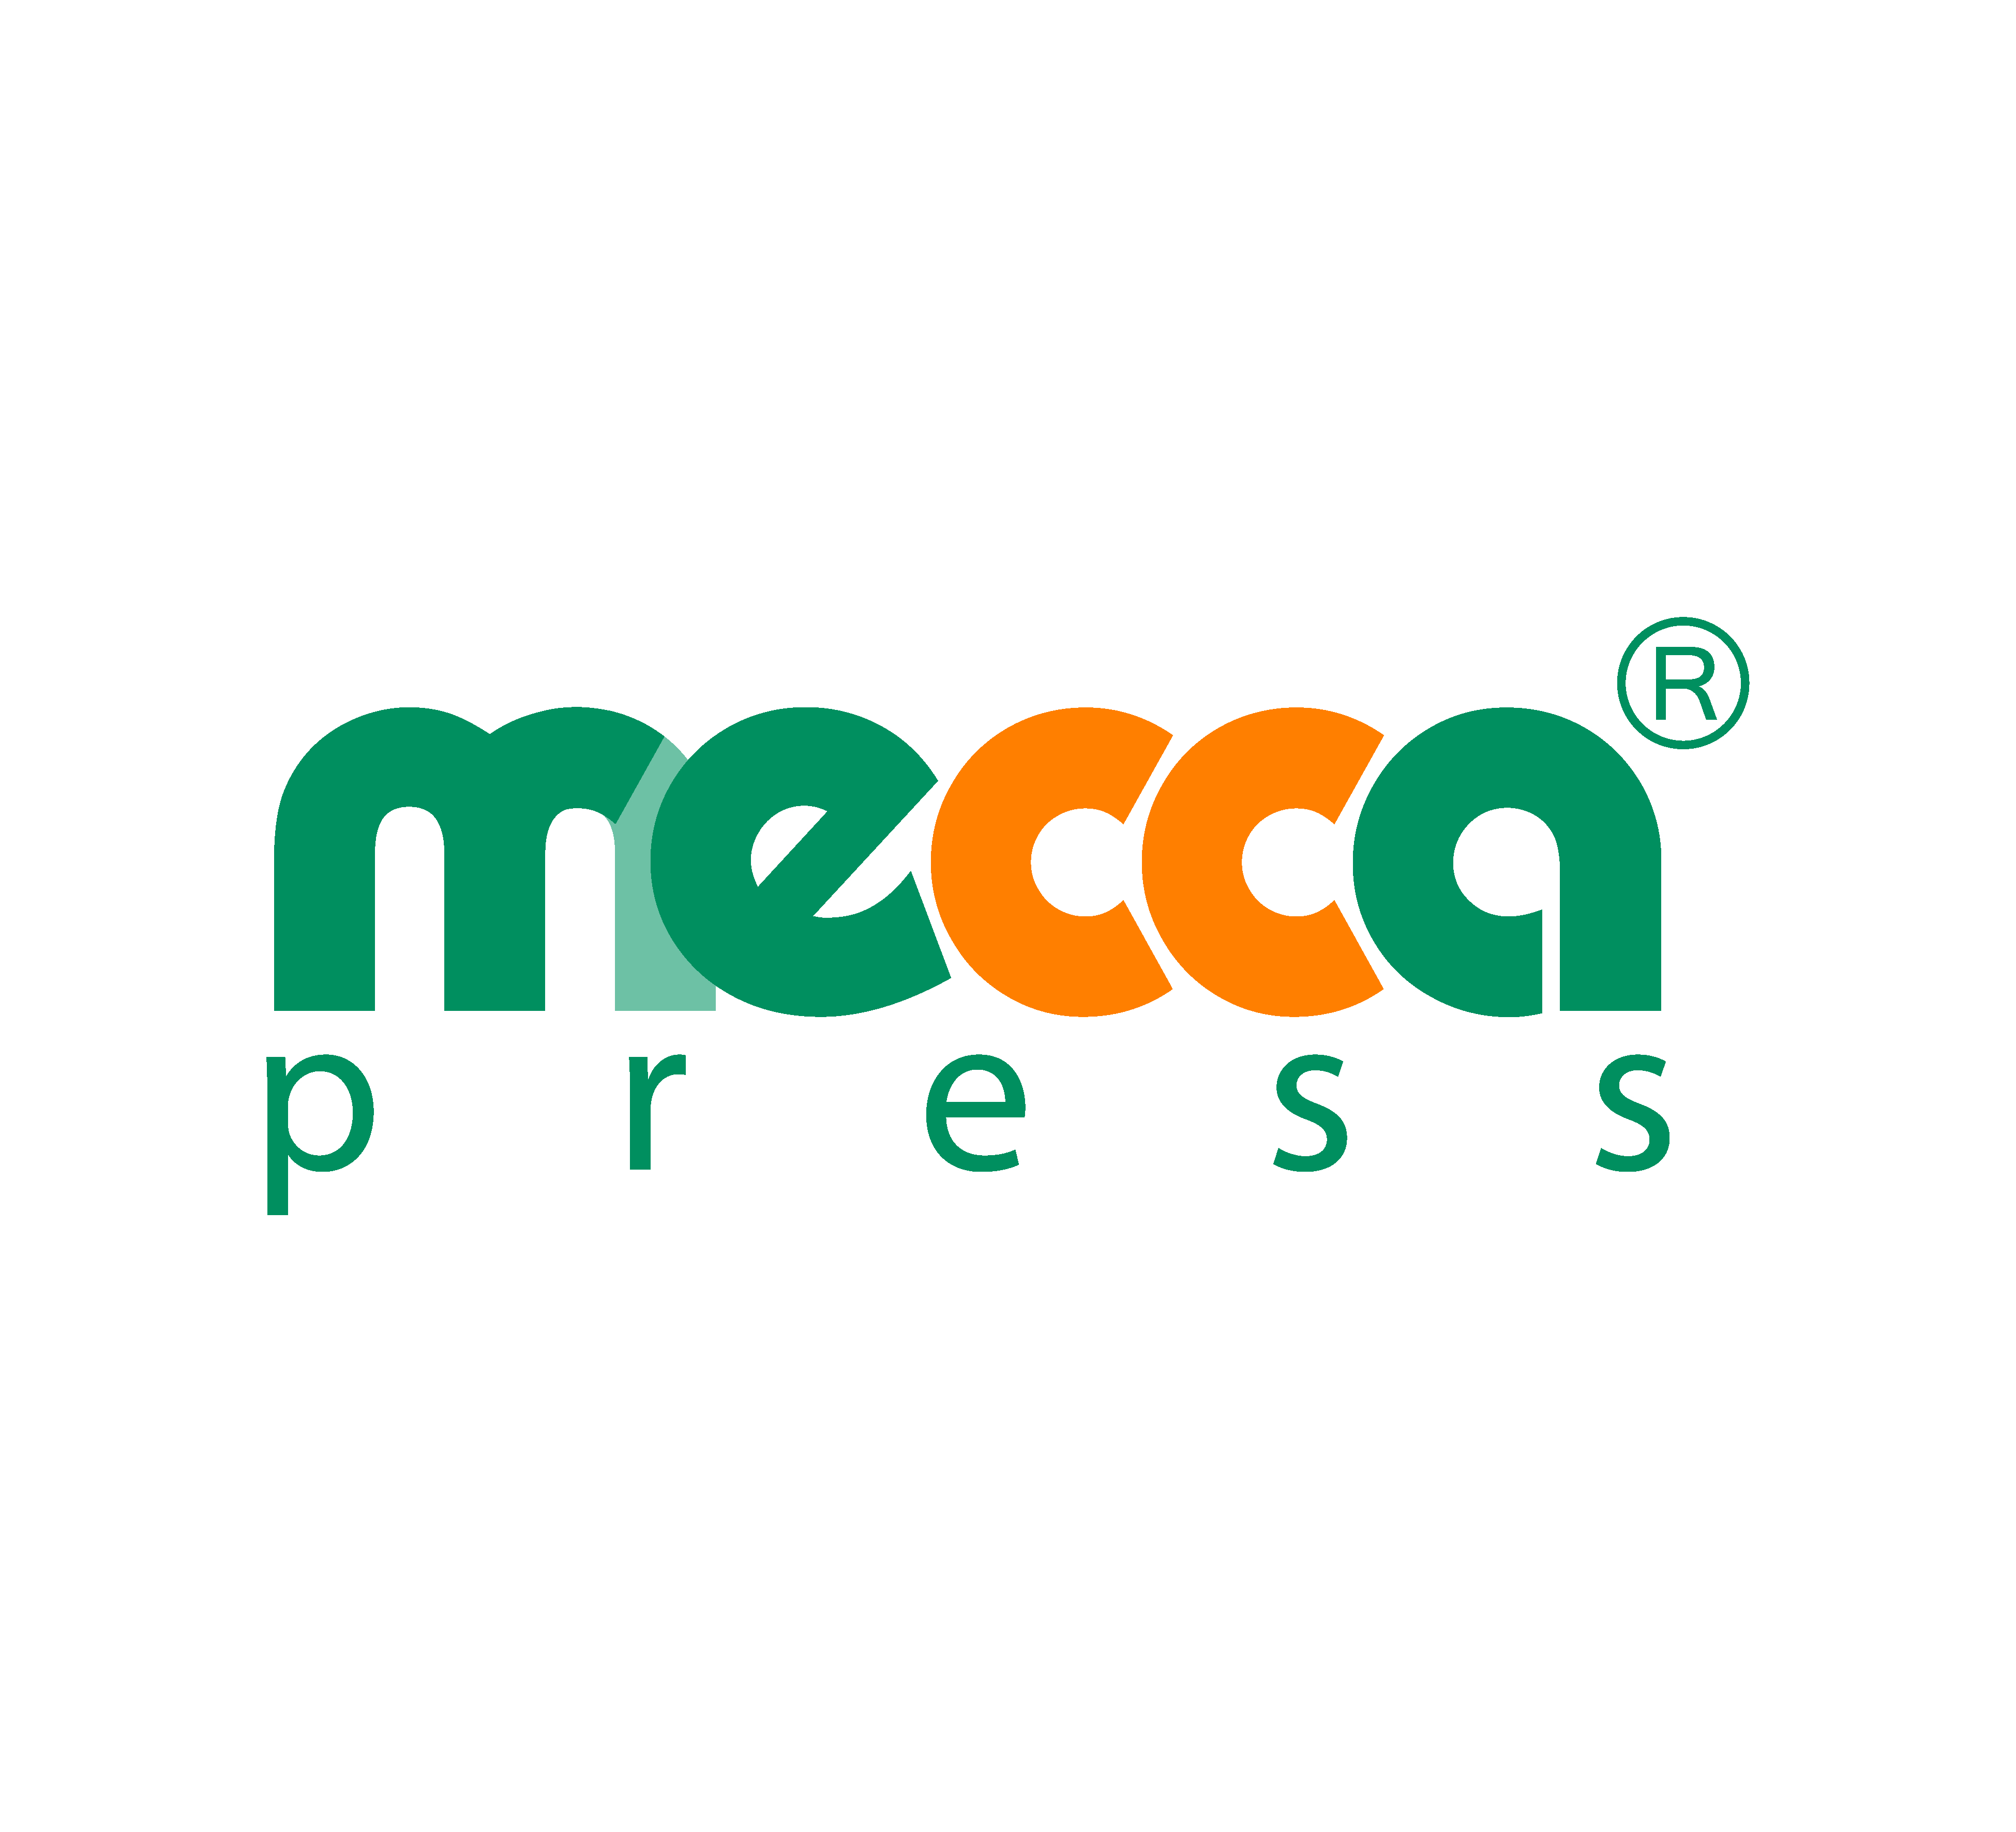 Mecca press